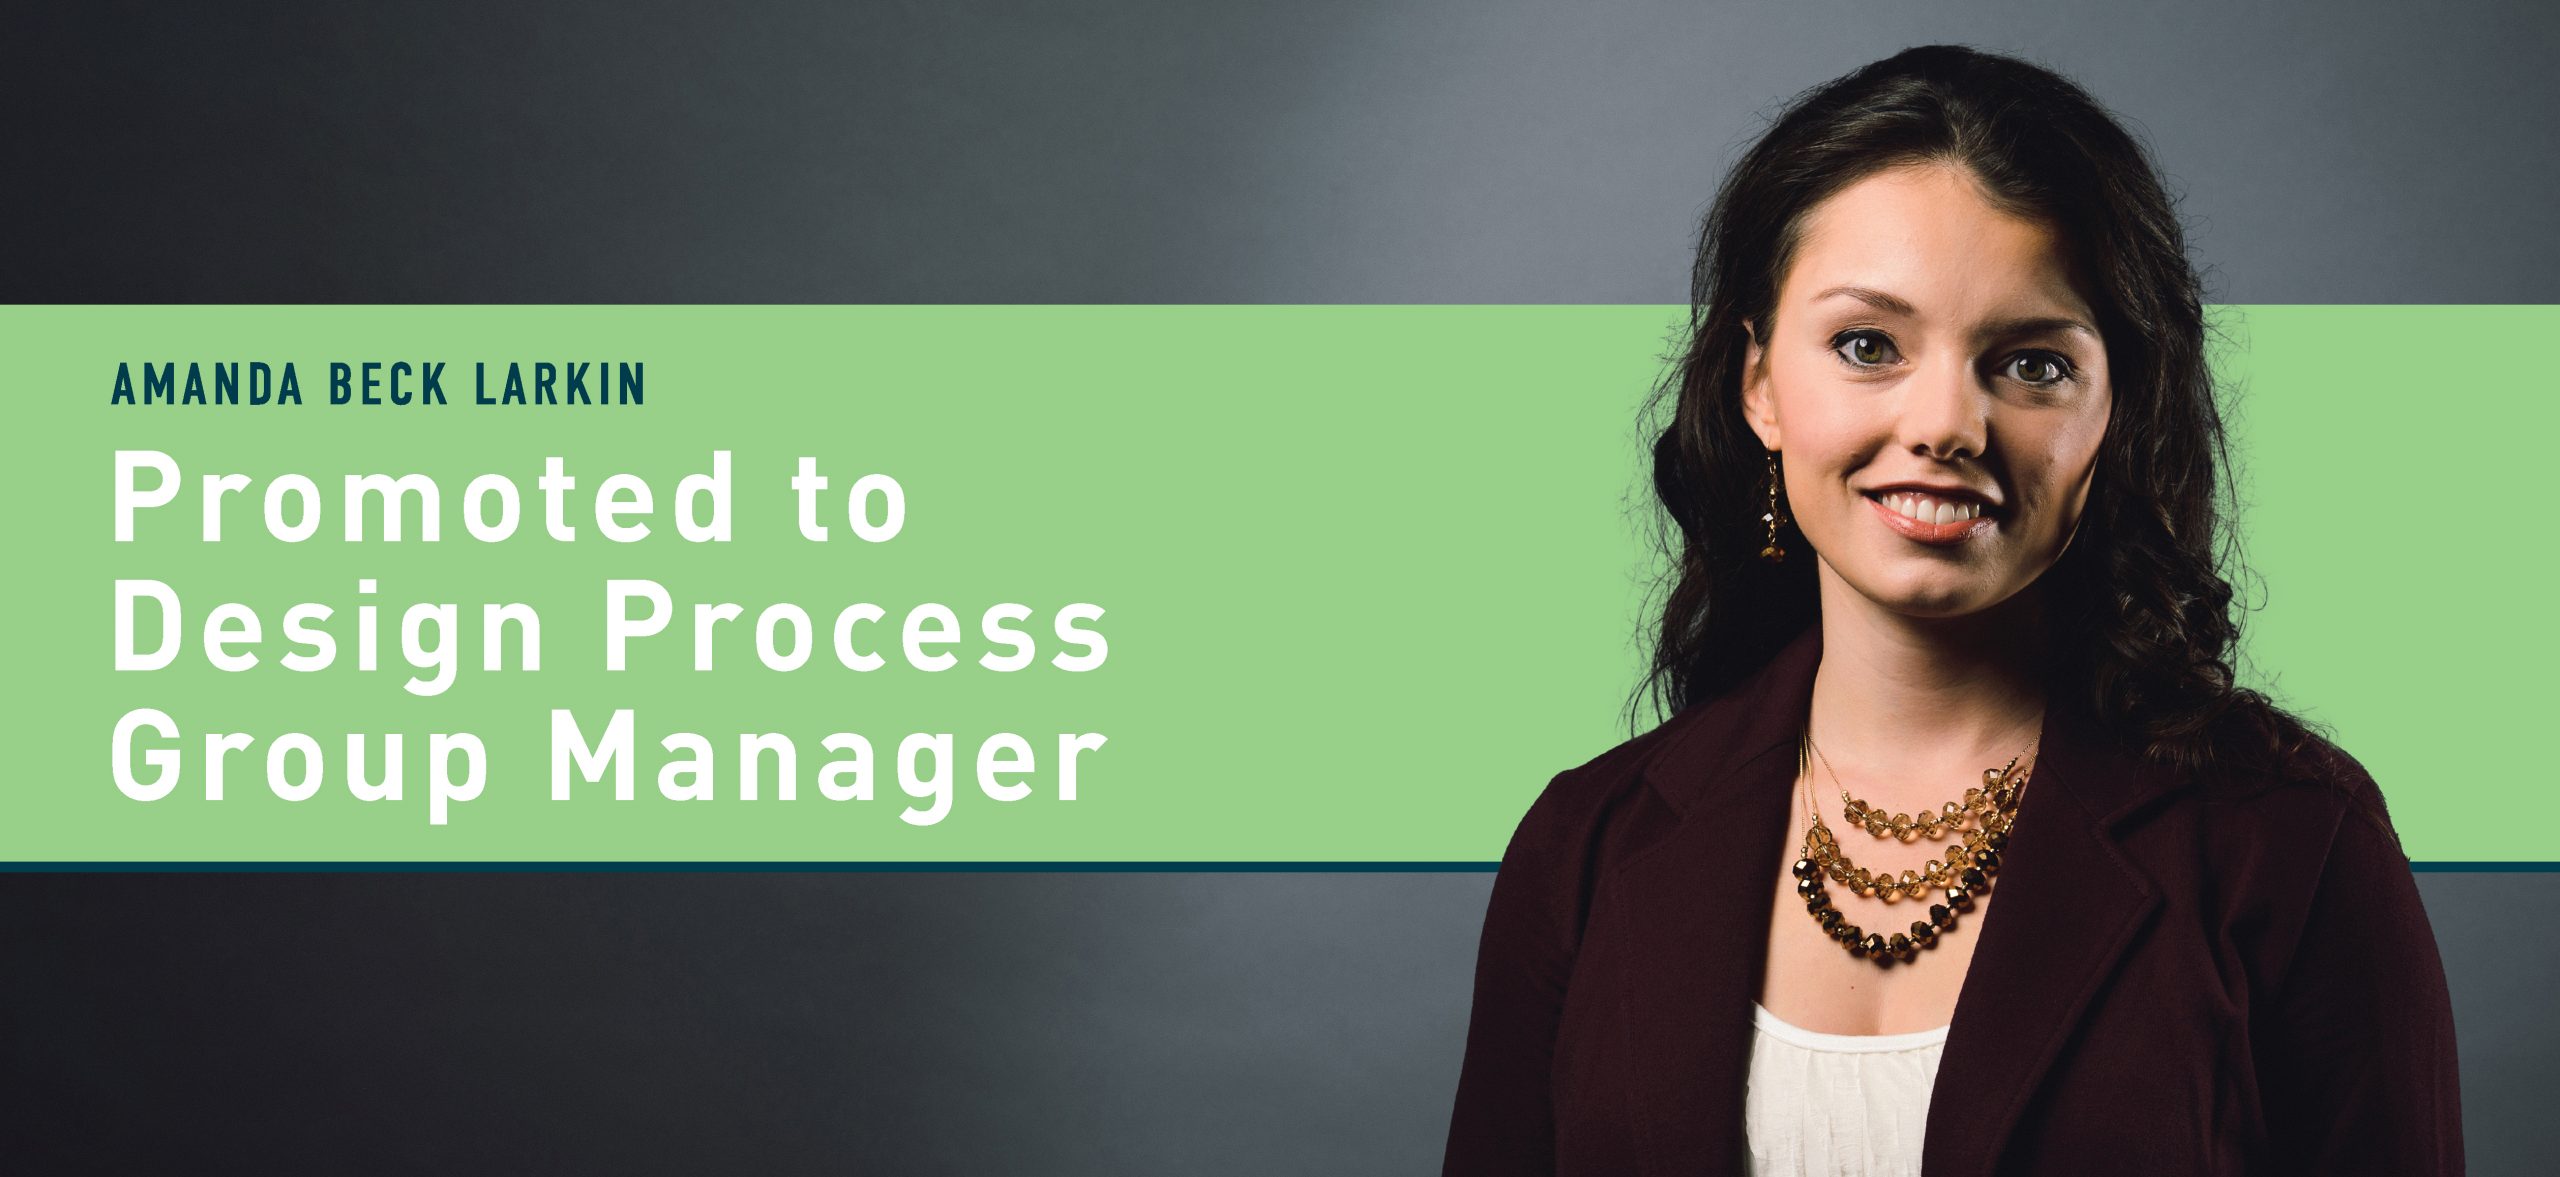 Amanda Beck Larkin, PE, CET, CFPS Promoted to Design Process Group Manager